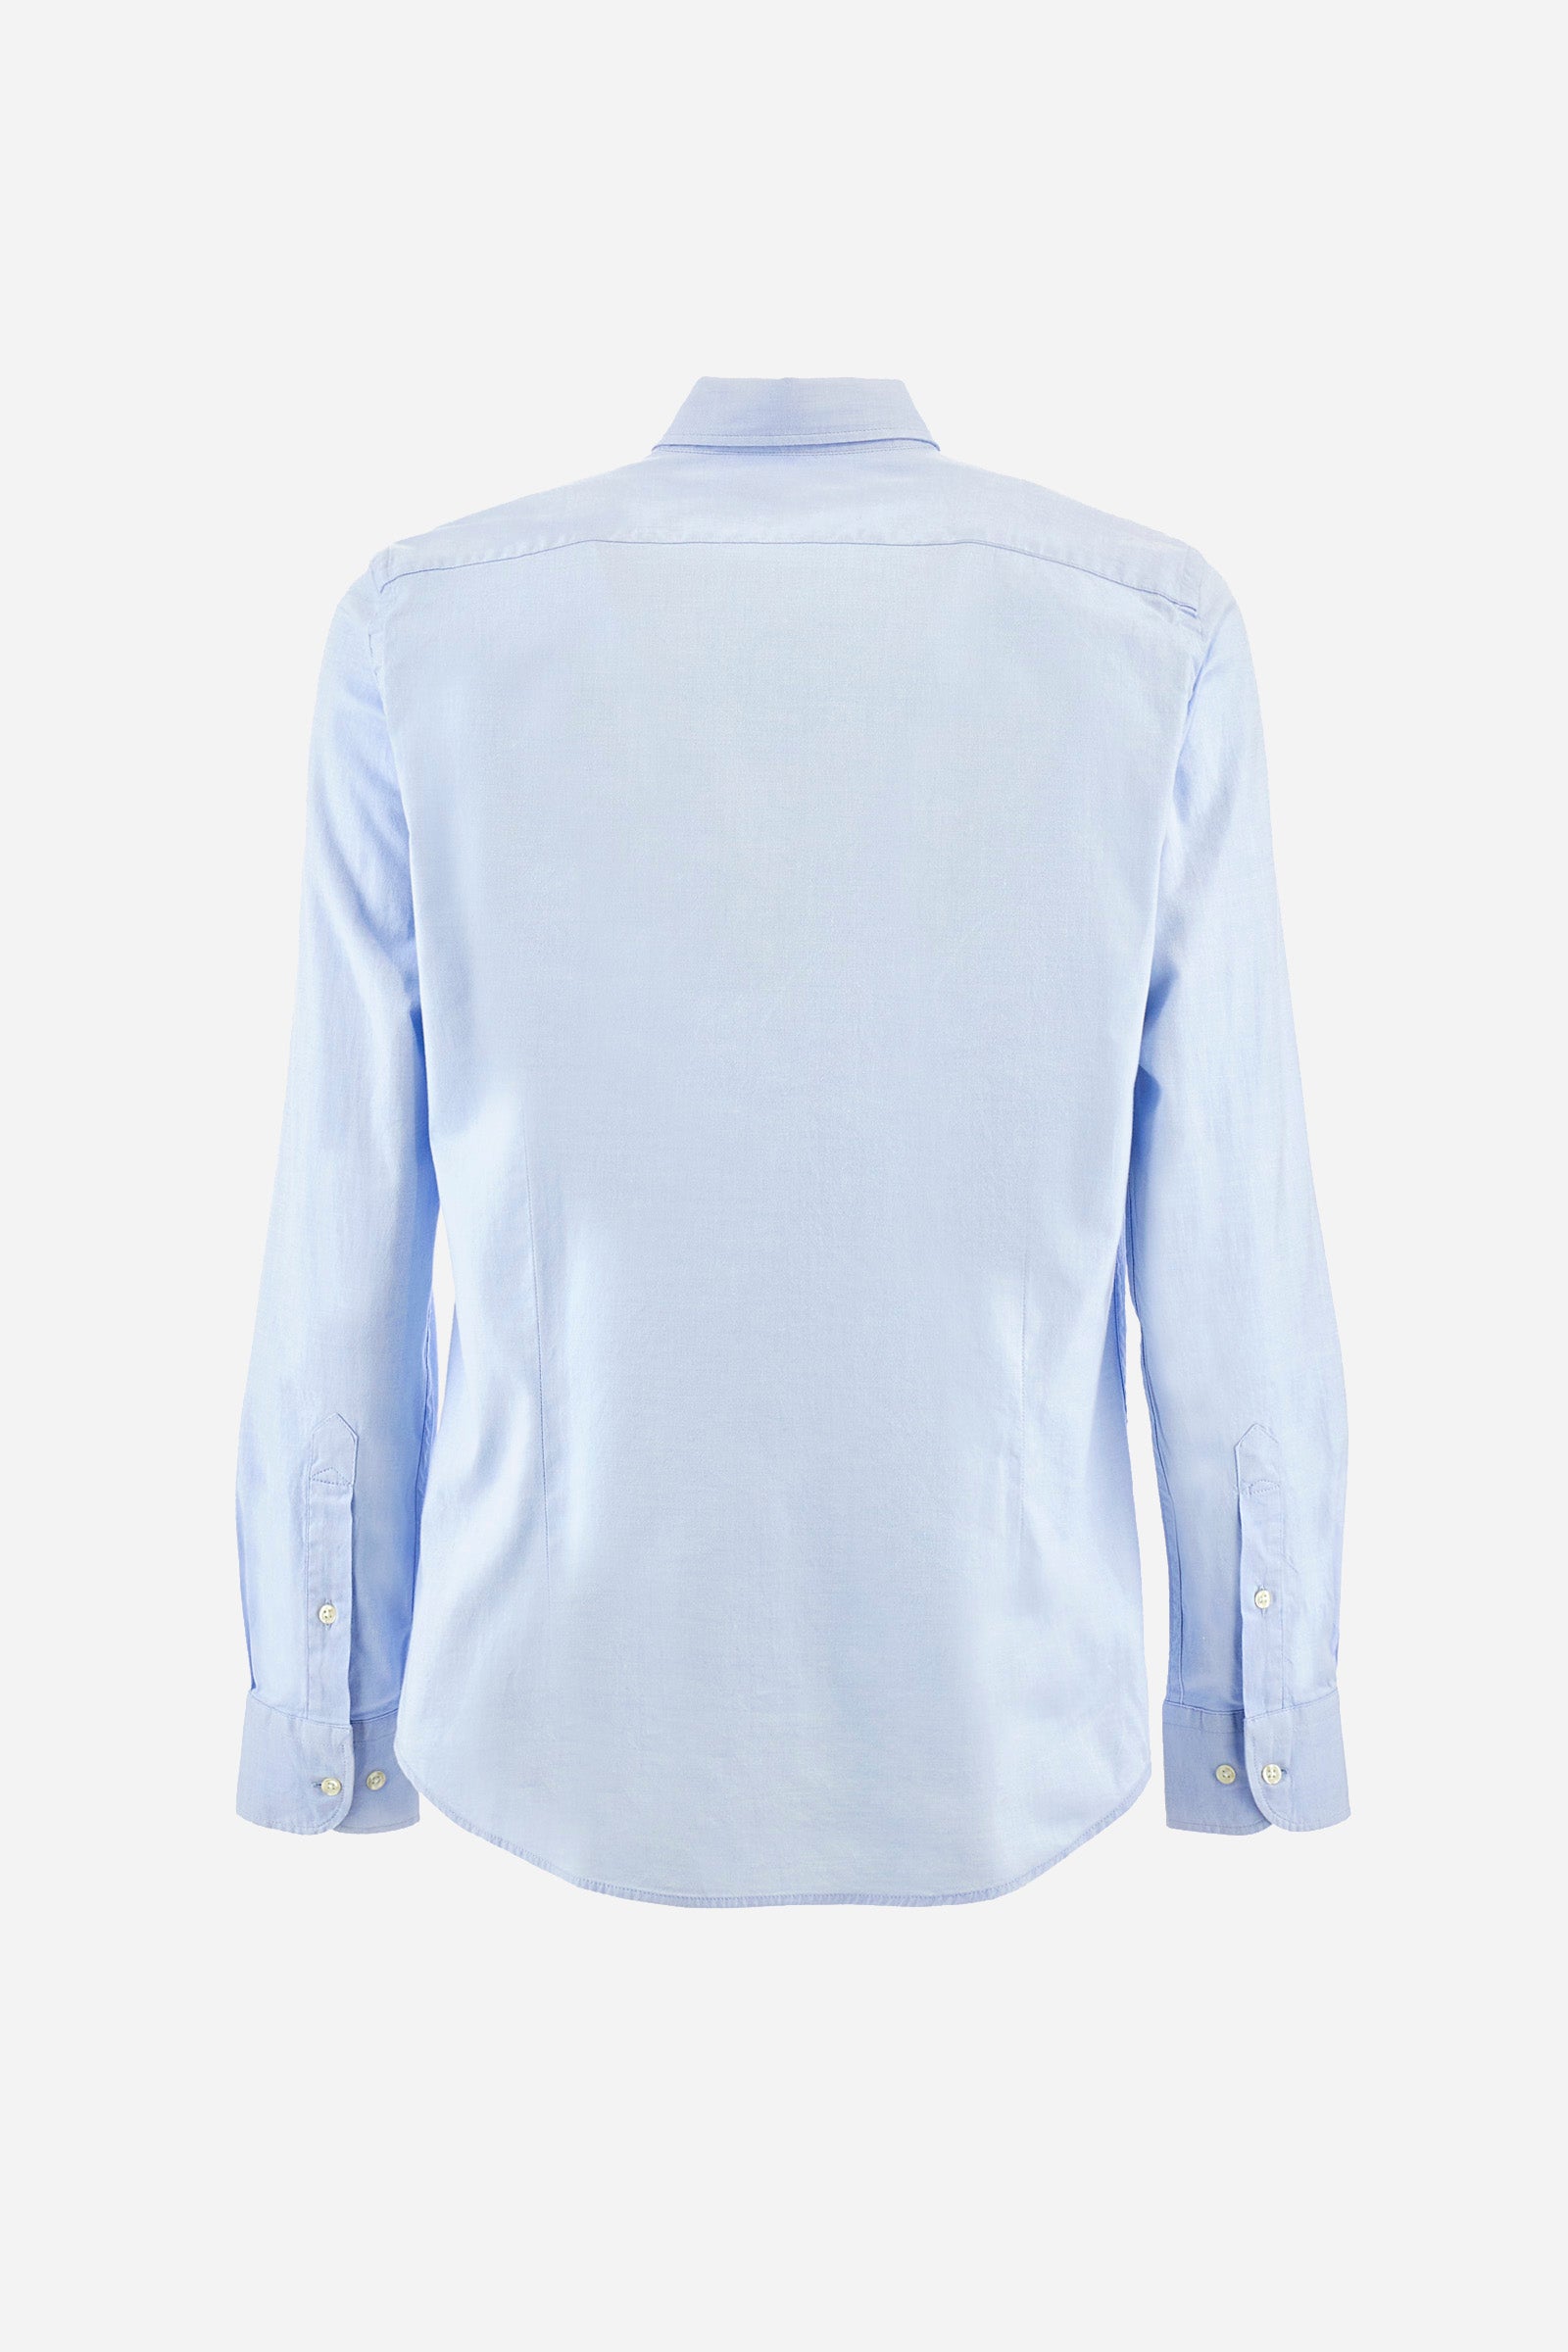 Men’s shirt in cotton slim fit long sleeves